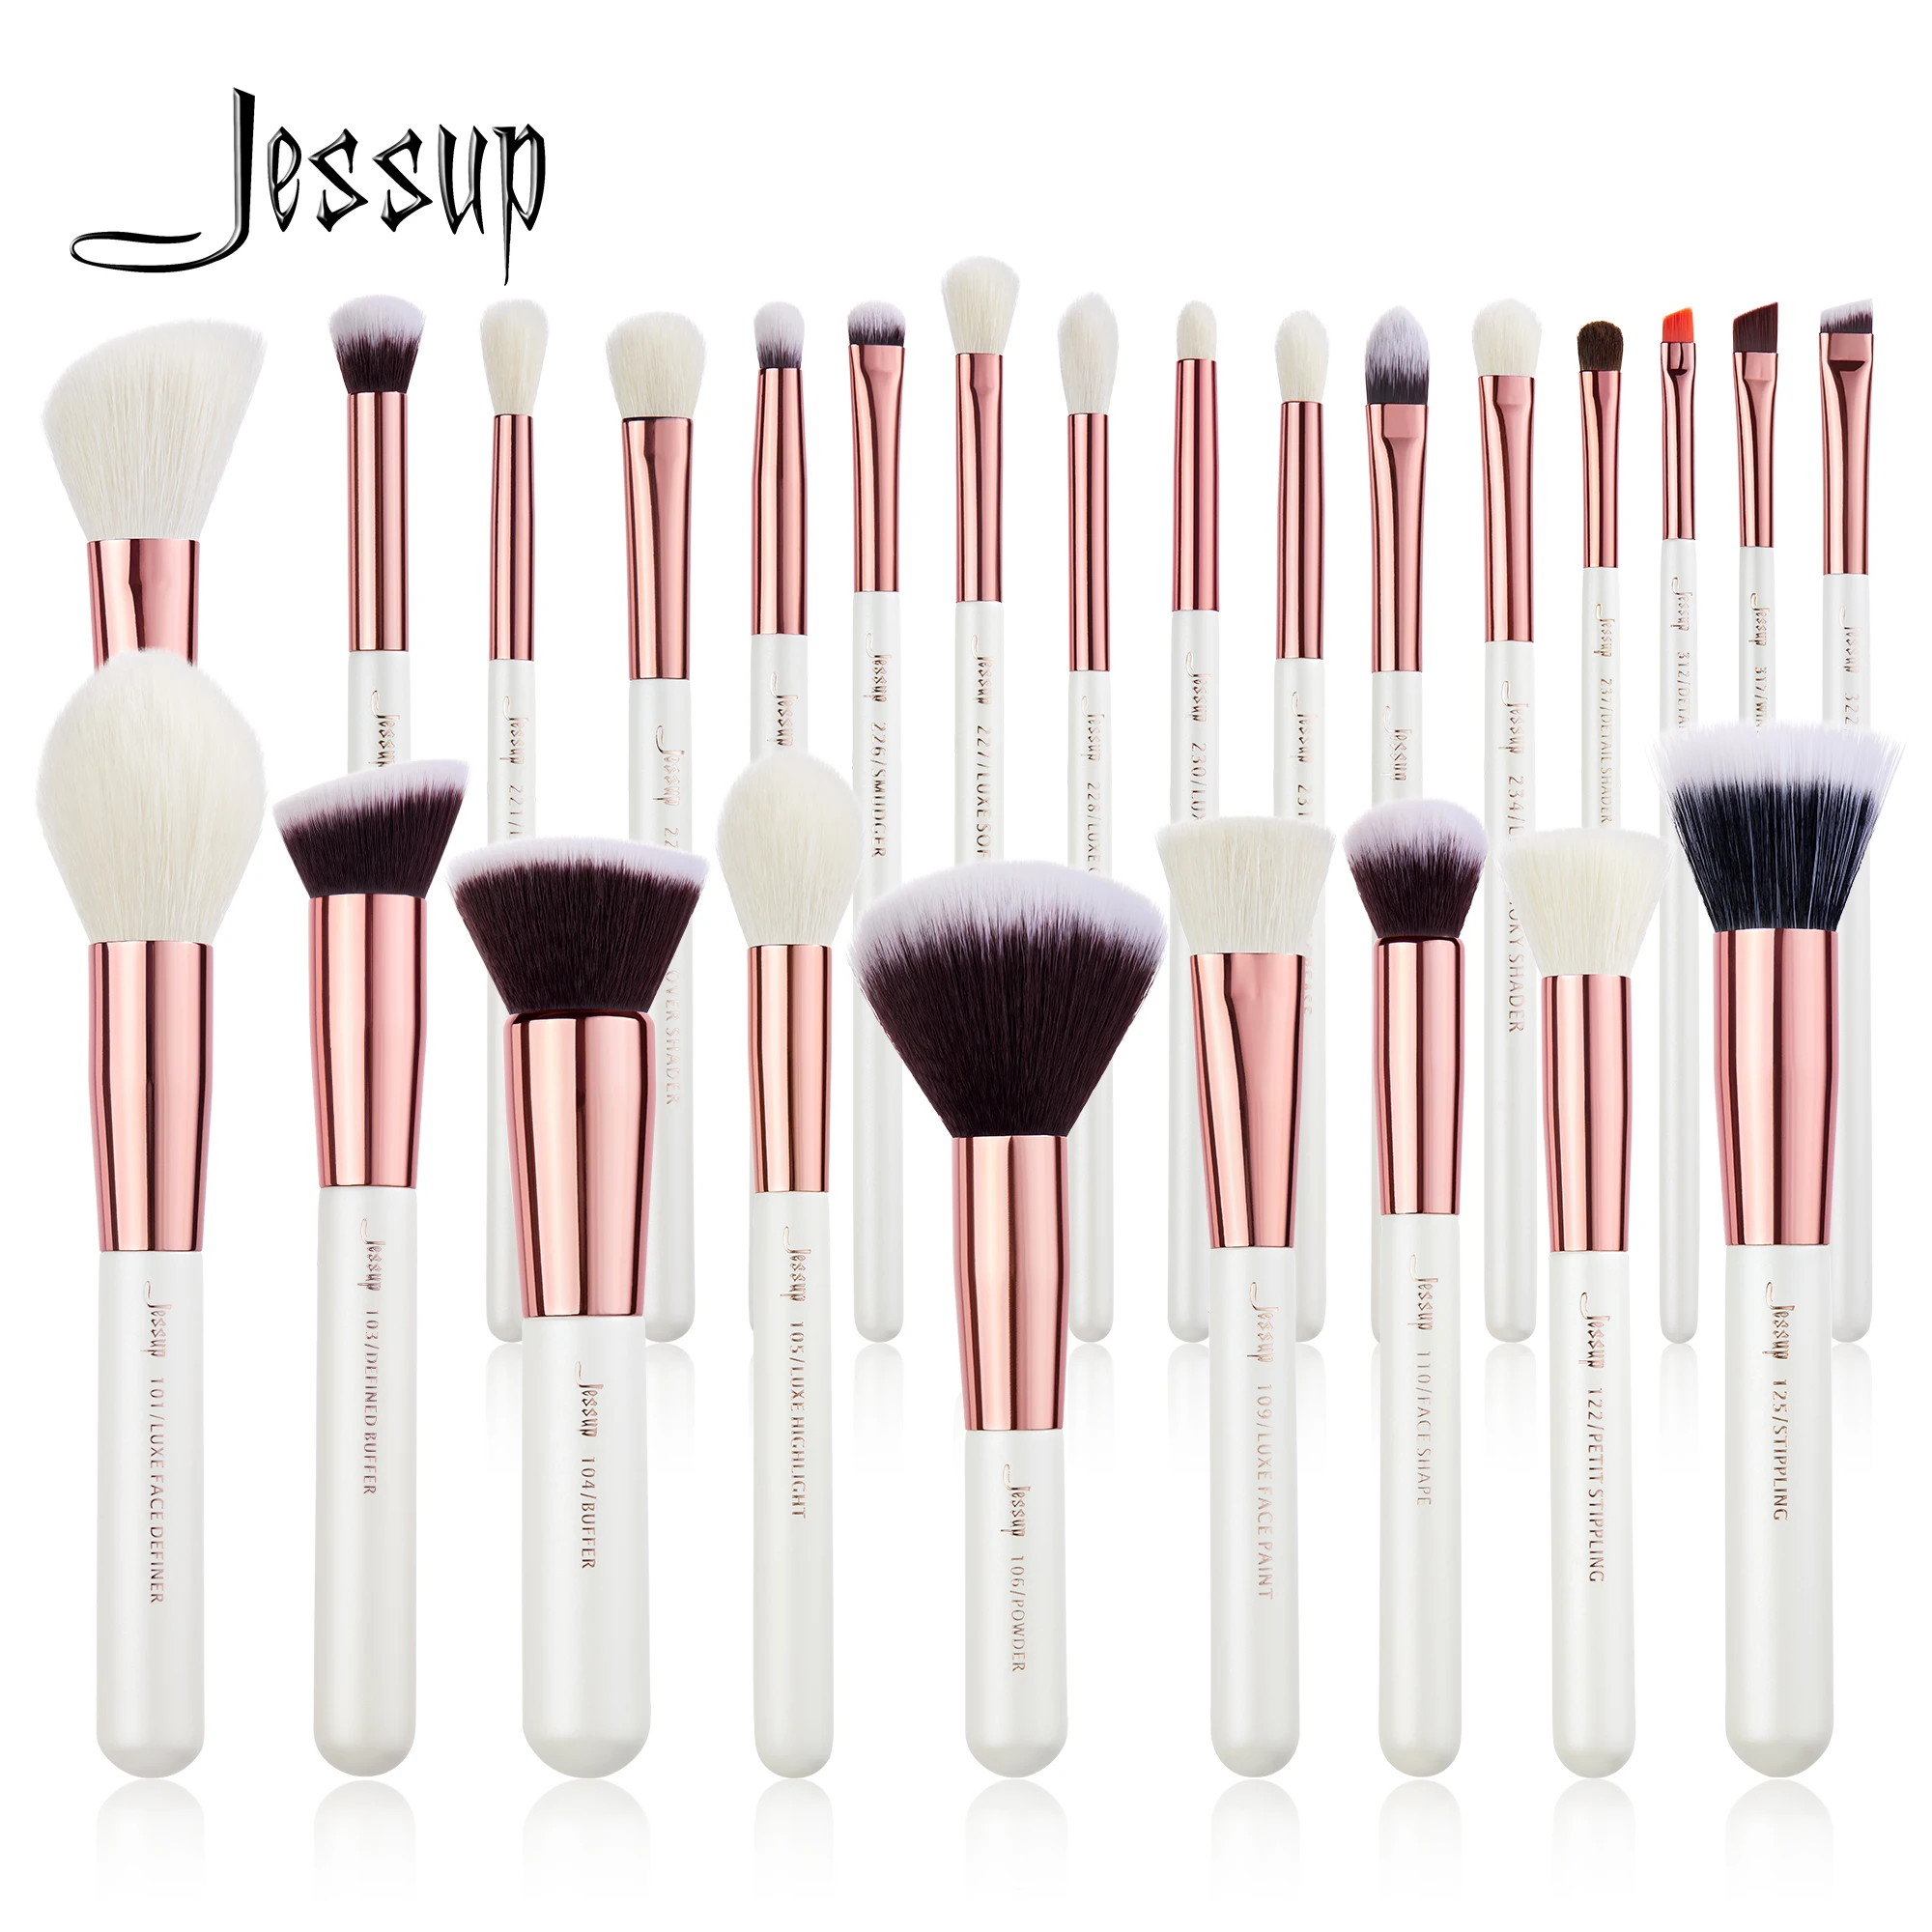 Jessup Professional Makeup Brushes Set 6-25Pcs Makeup Brush Natural Synthetic Foundation Powder Highlighter Pearl White/Rosegold 1